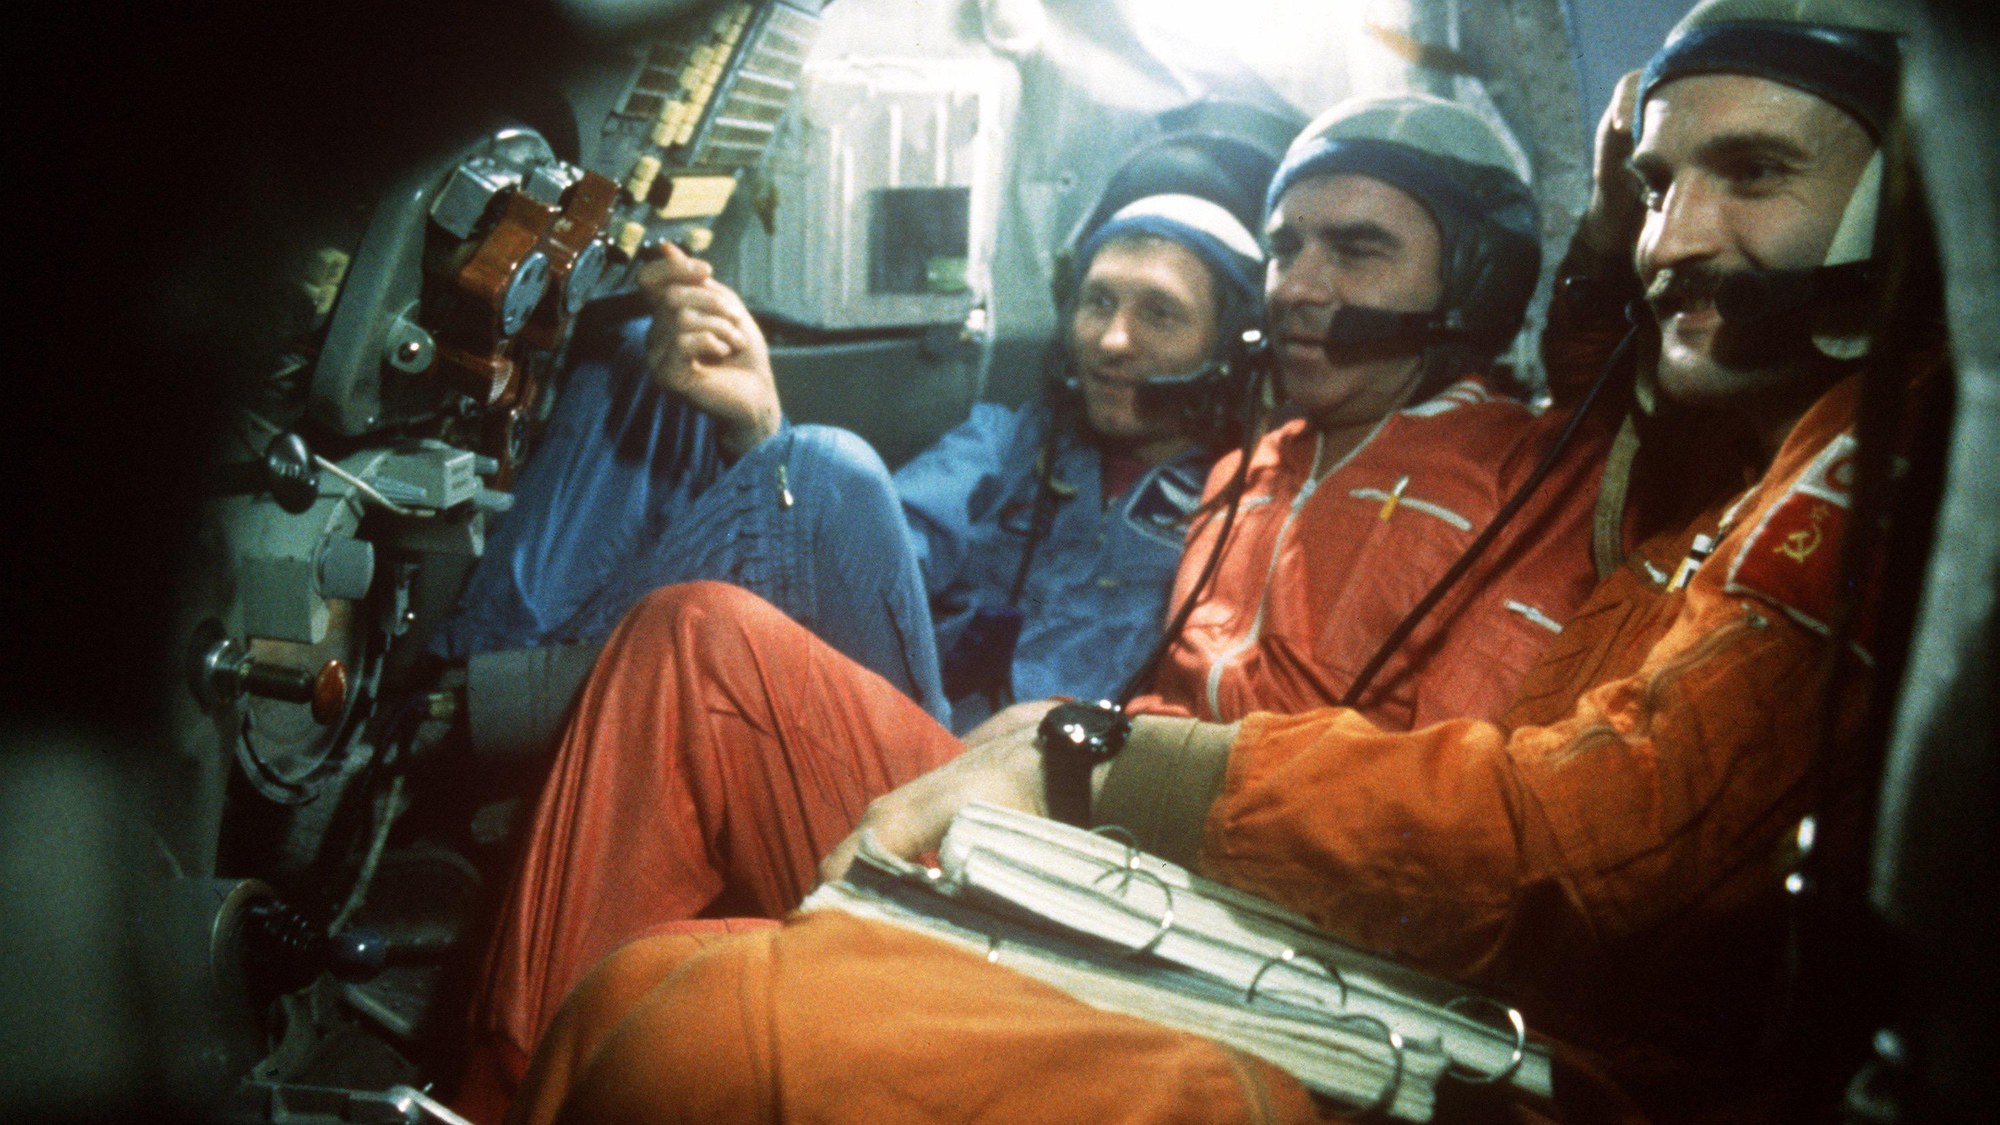 The MIR'92 crew in the Soyuz simulator